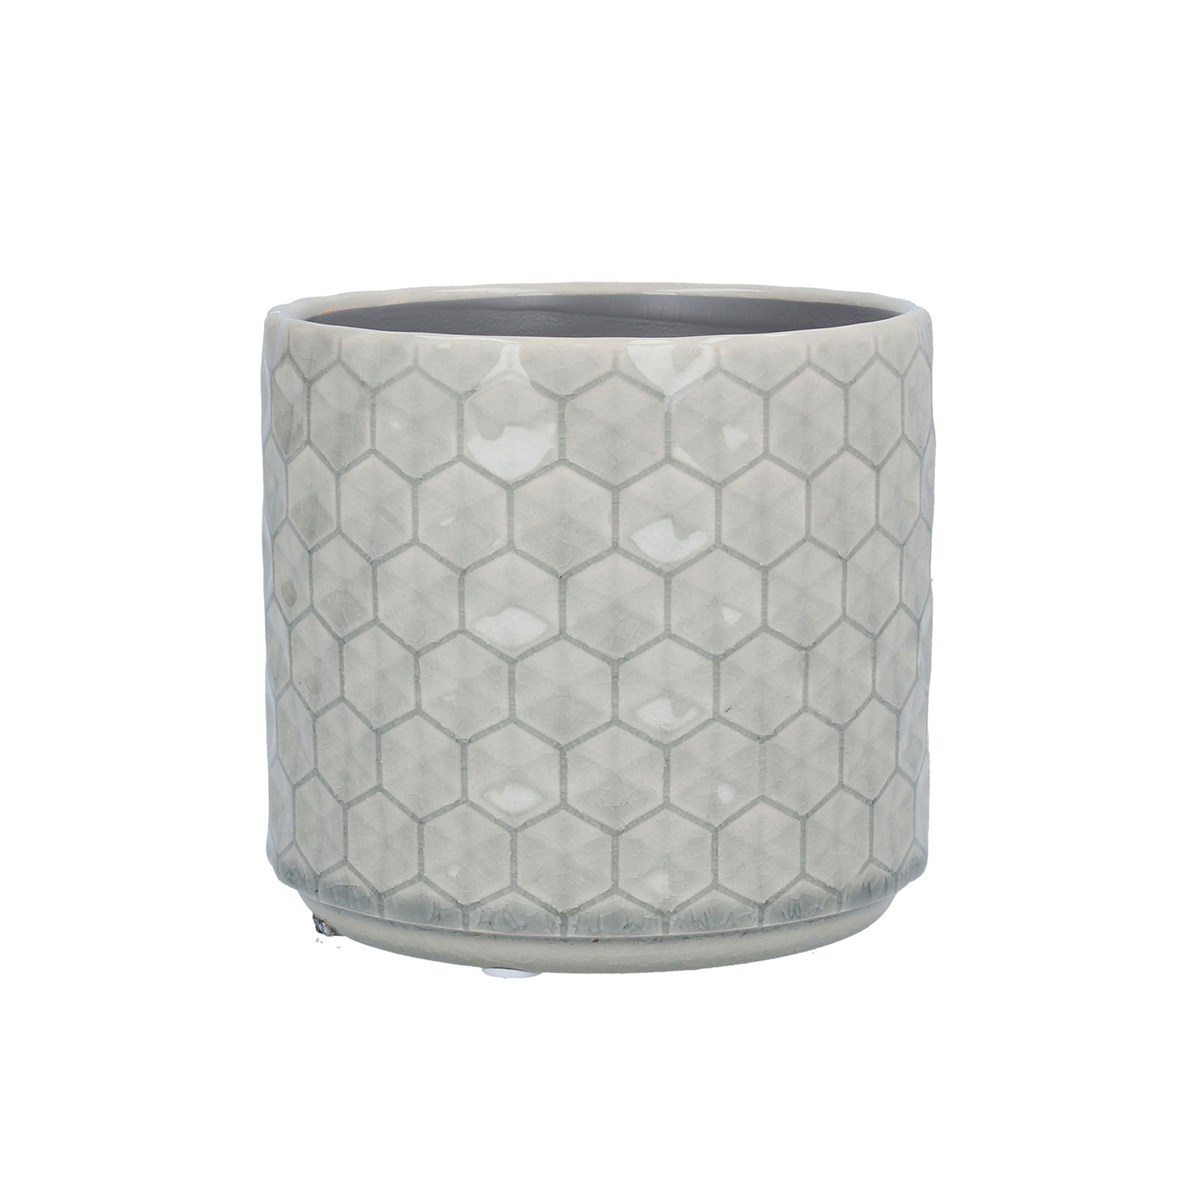 Gisela Graham Grey Honeycomb Ceramic Pot Cover, Small